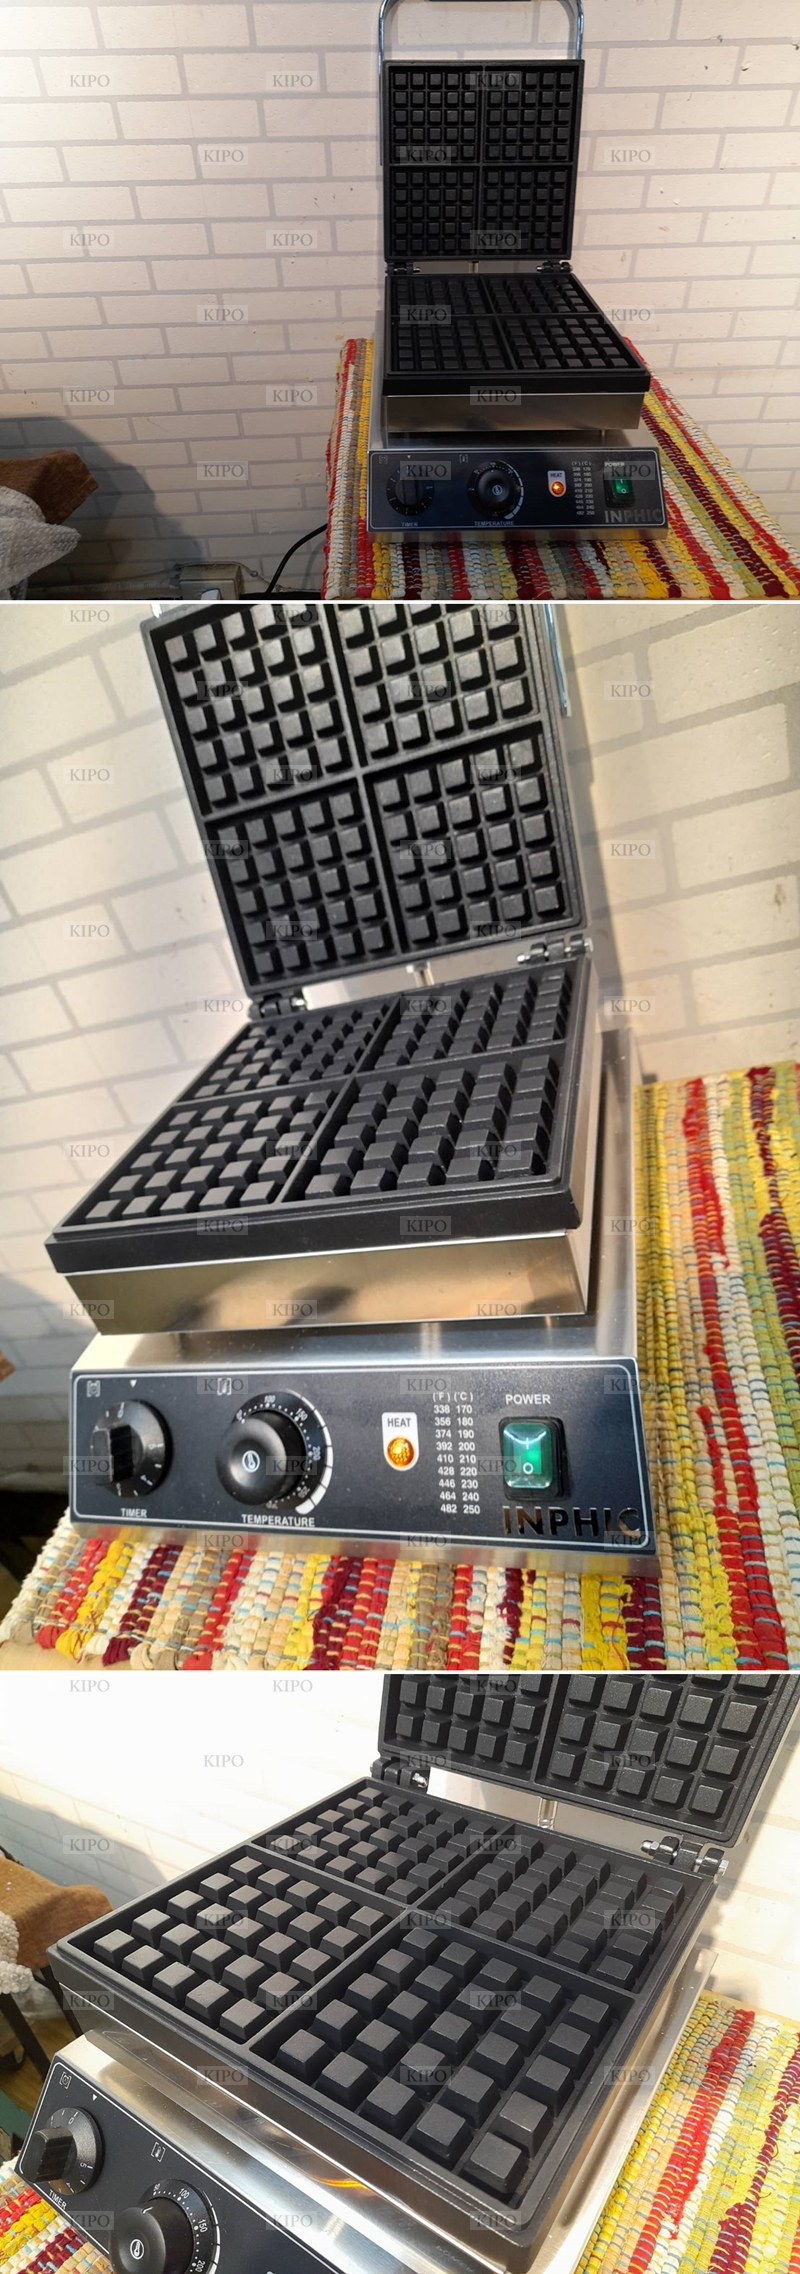 KIPO-商用華夫爐蜂窩餅機器大四格方形可頌鬆餅機單片格子牛角包窩夫機-MRA020104A